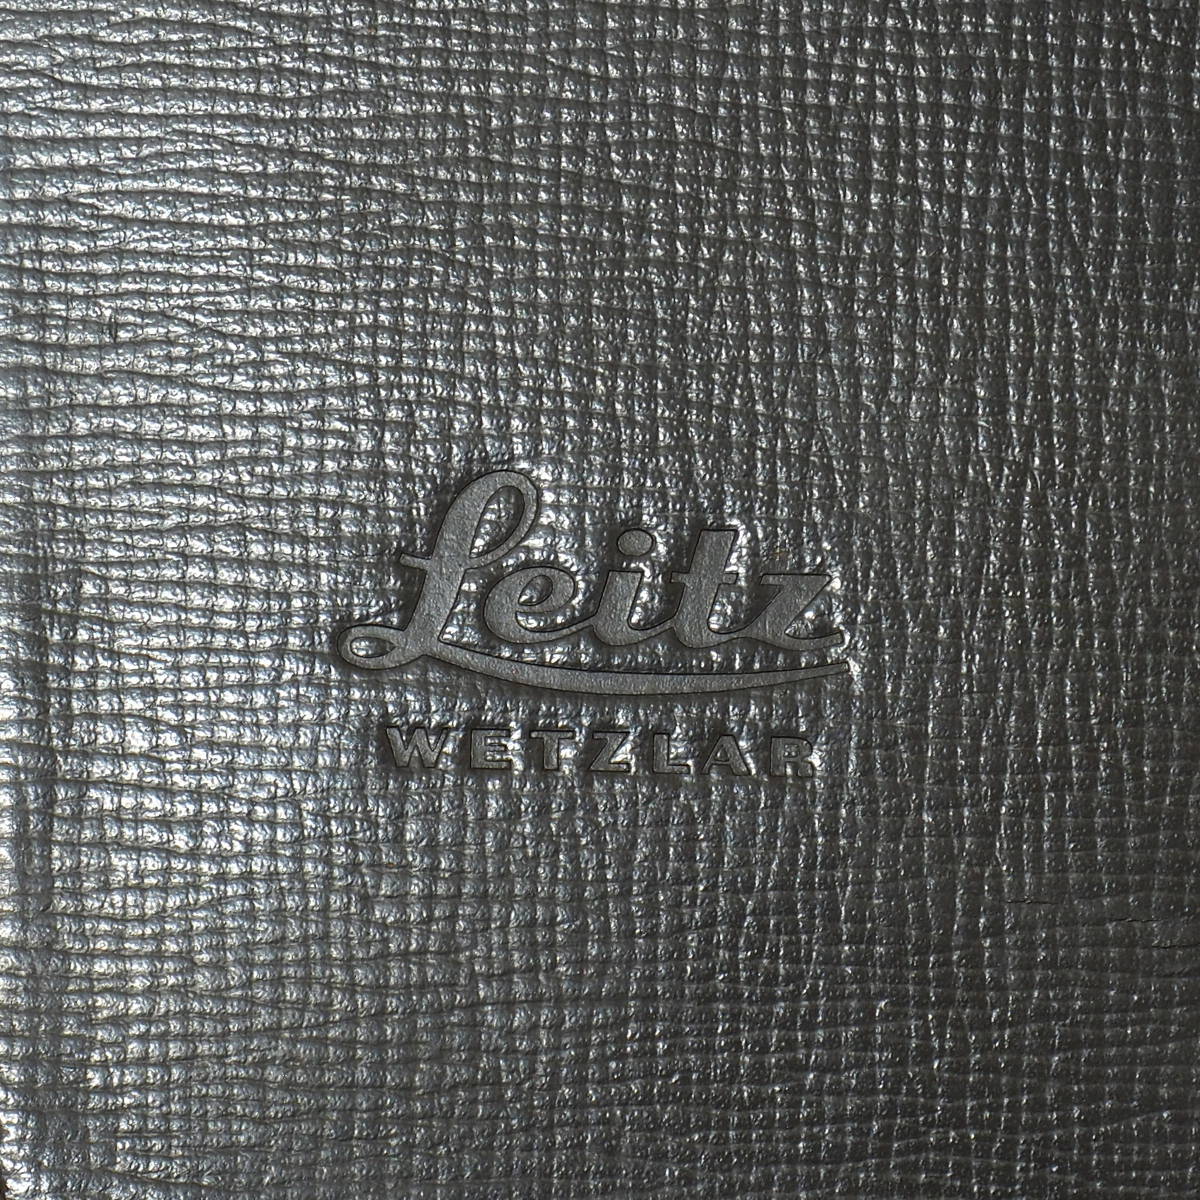 Leitz WETZLAR レザー ケース 革ケース ガゼット バック ライカ カバン GERMANY 210mmx190mmx90mm LEICA Leather Case ヴィンテージ_画像10